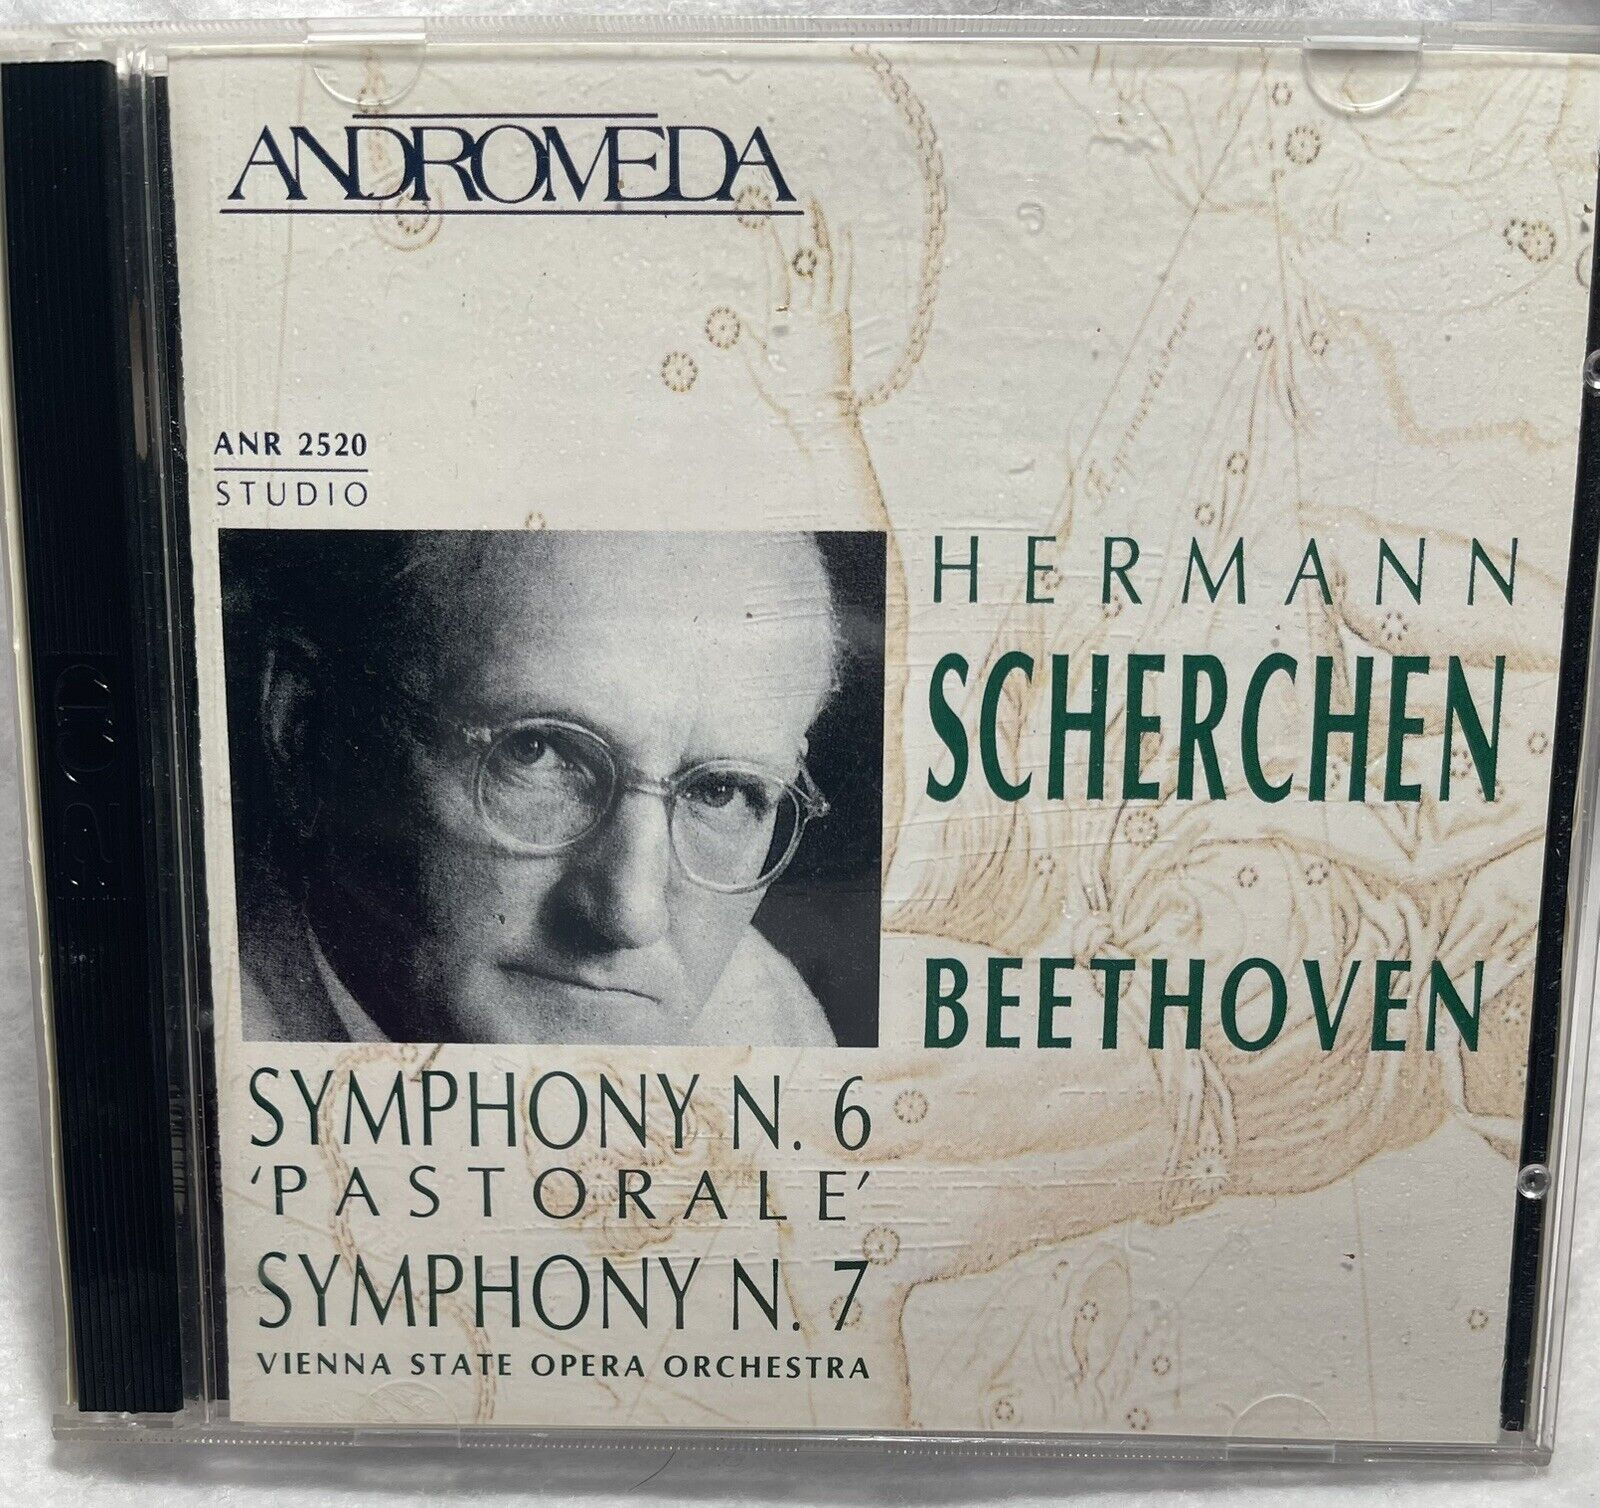 ANR 2520 Beethoven Hermann Scherchen Symphony N. 6 Pastorale Symbohony N. 7 CD